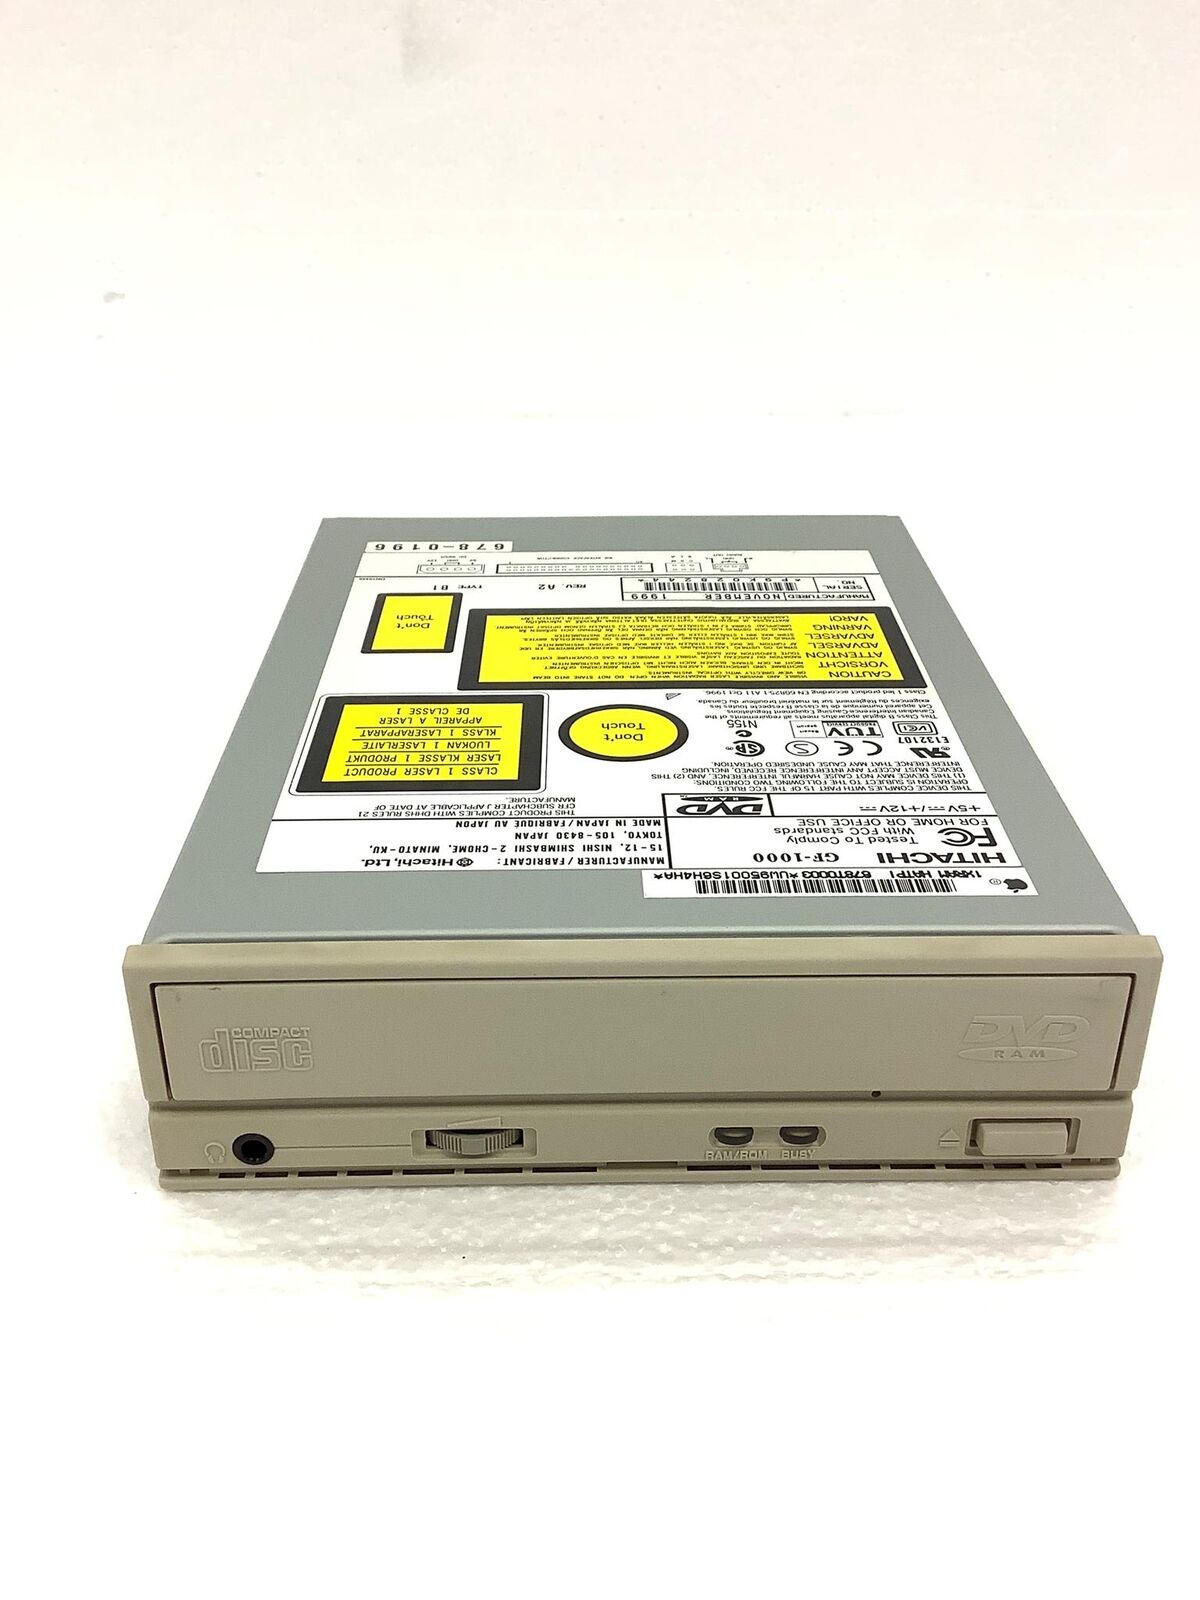 Apple Hitachi GF-1000 CARTRIDGE CD-DVD RAM Drives From Apple Power Macintosh G4